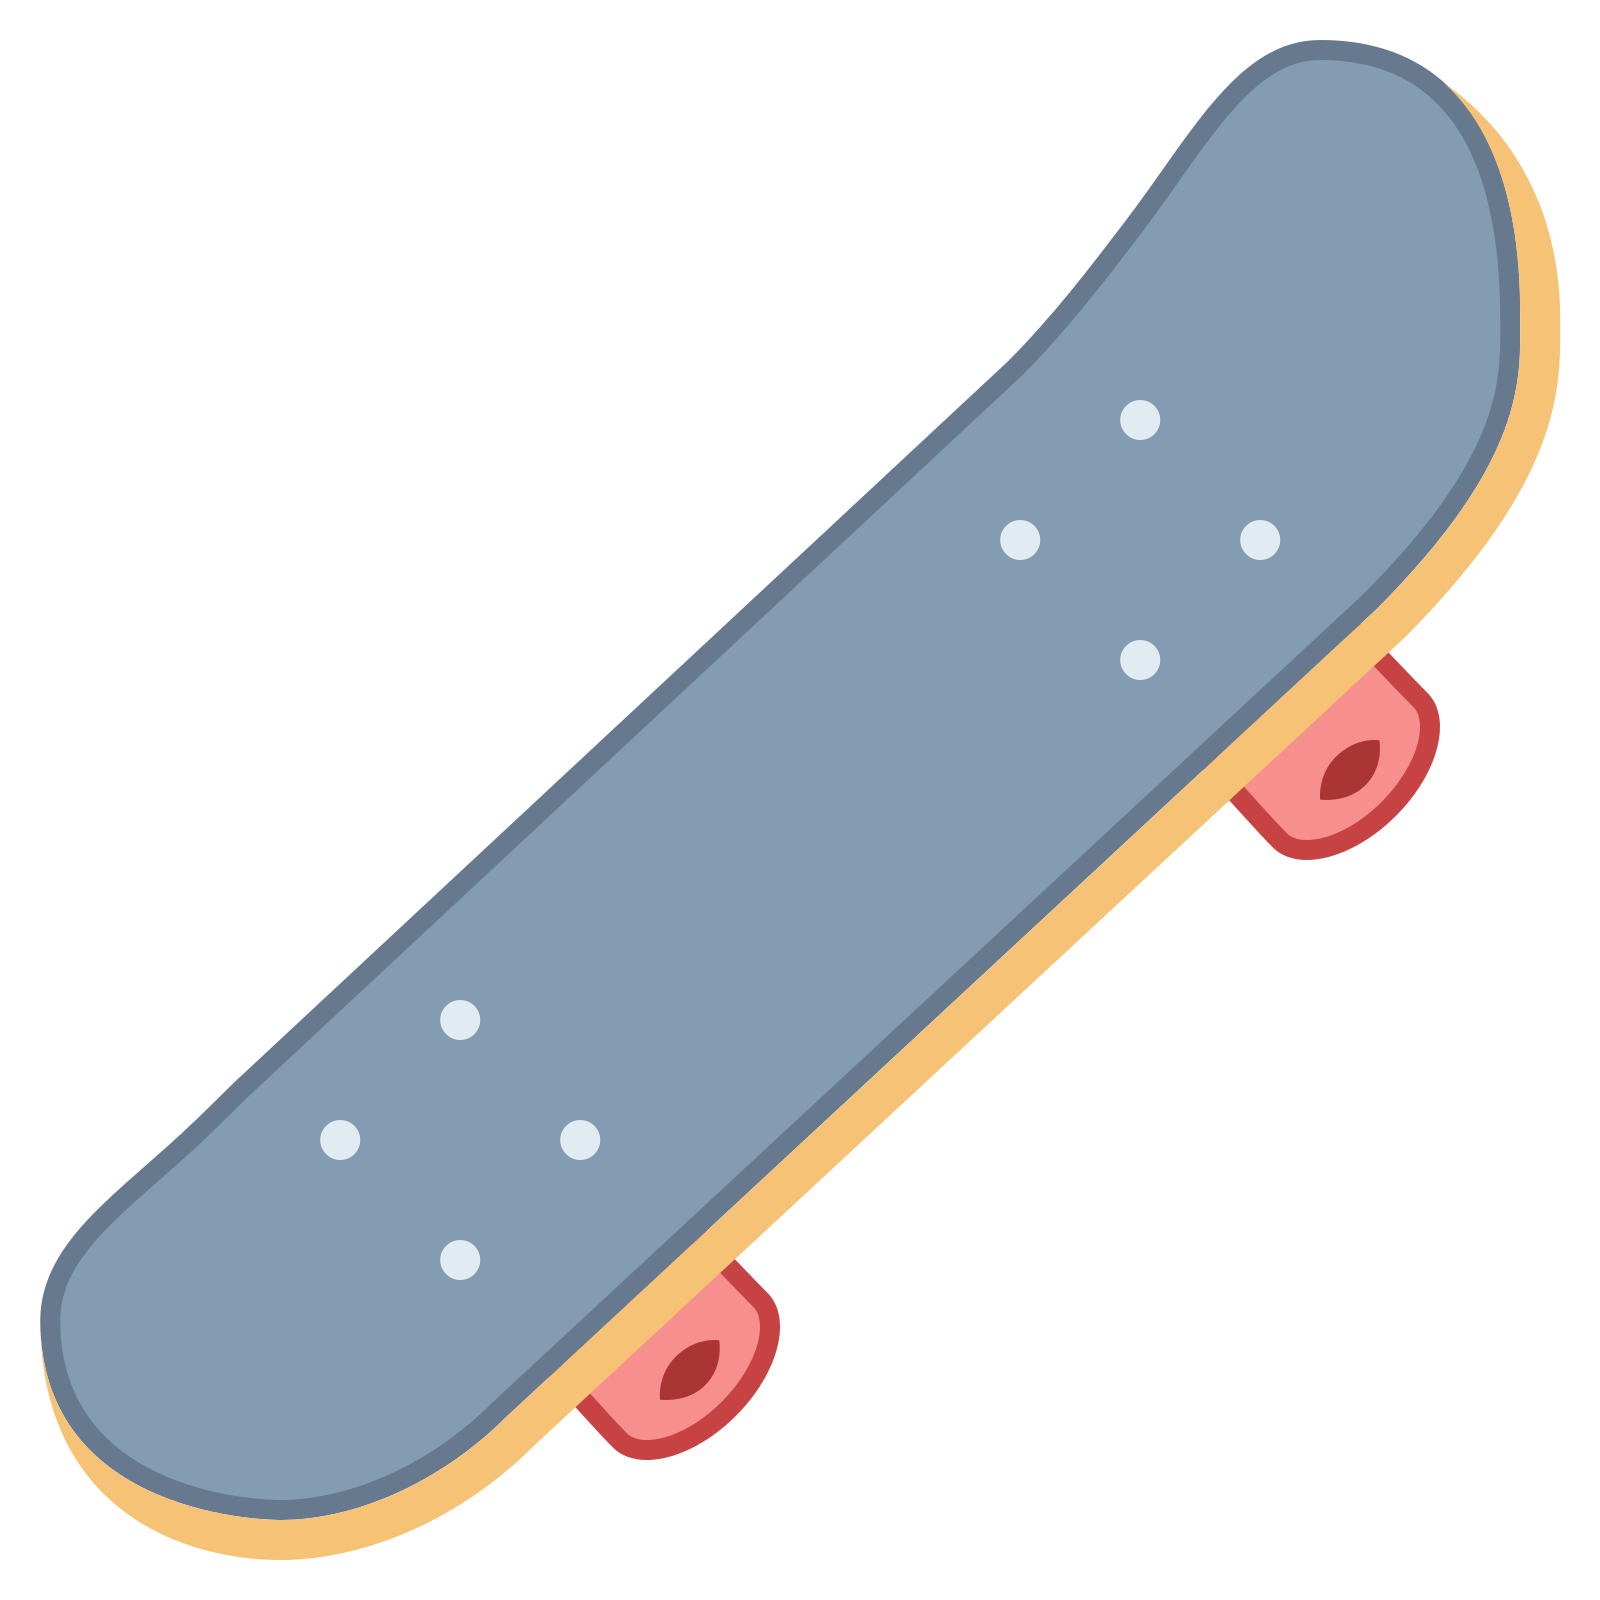 Green clipart skateboard. Jokingart com download free